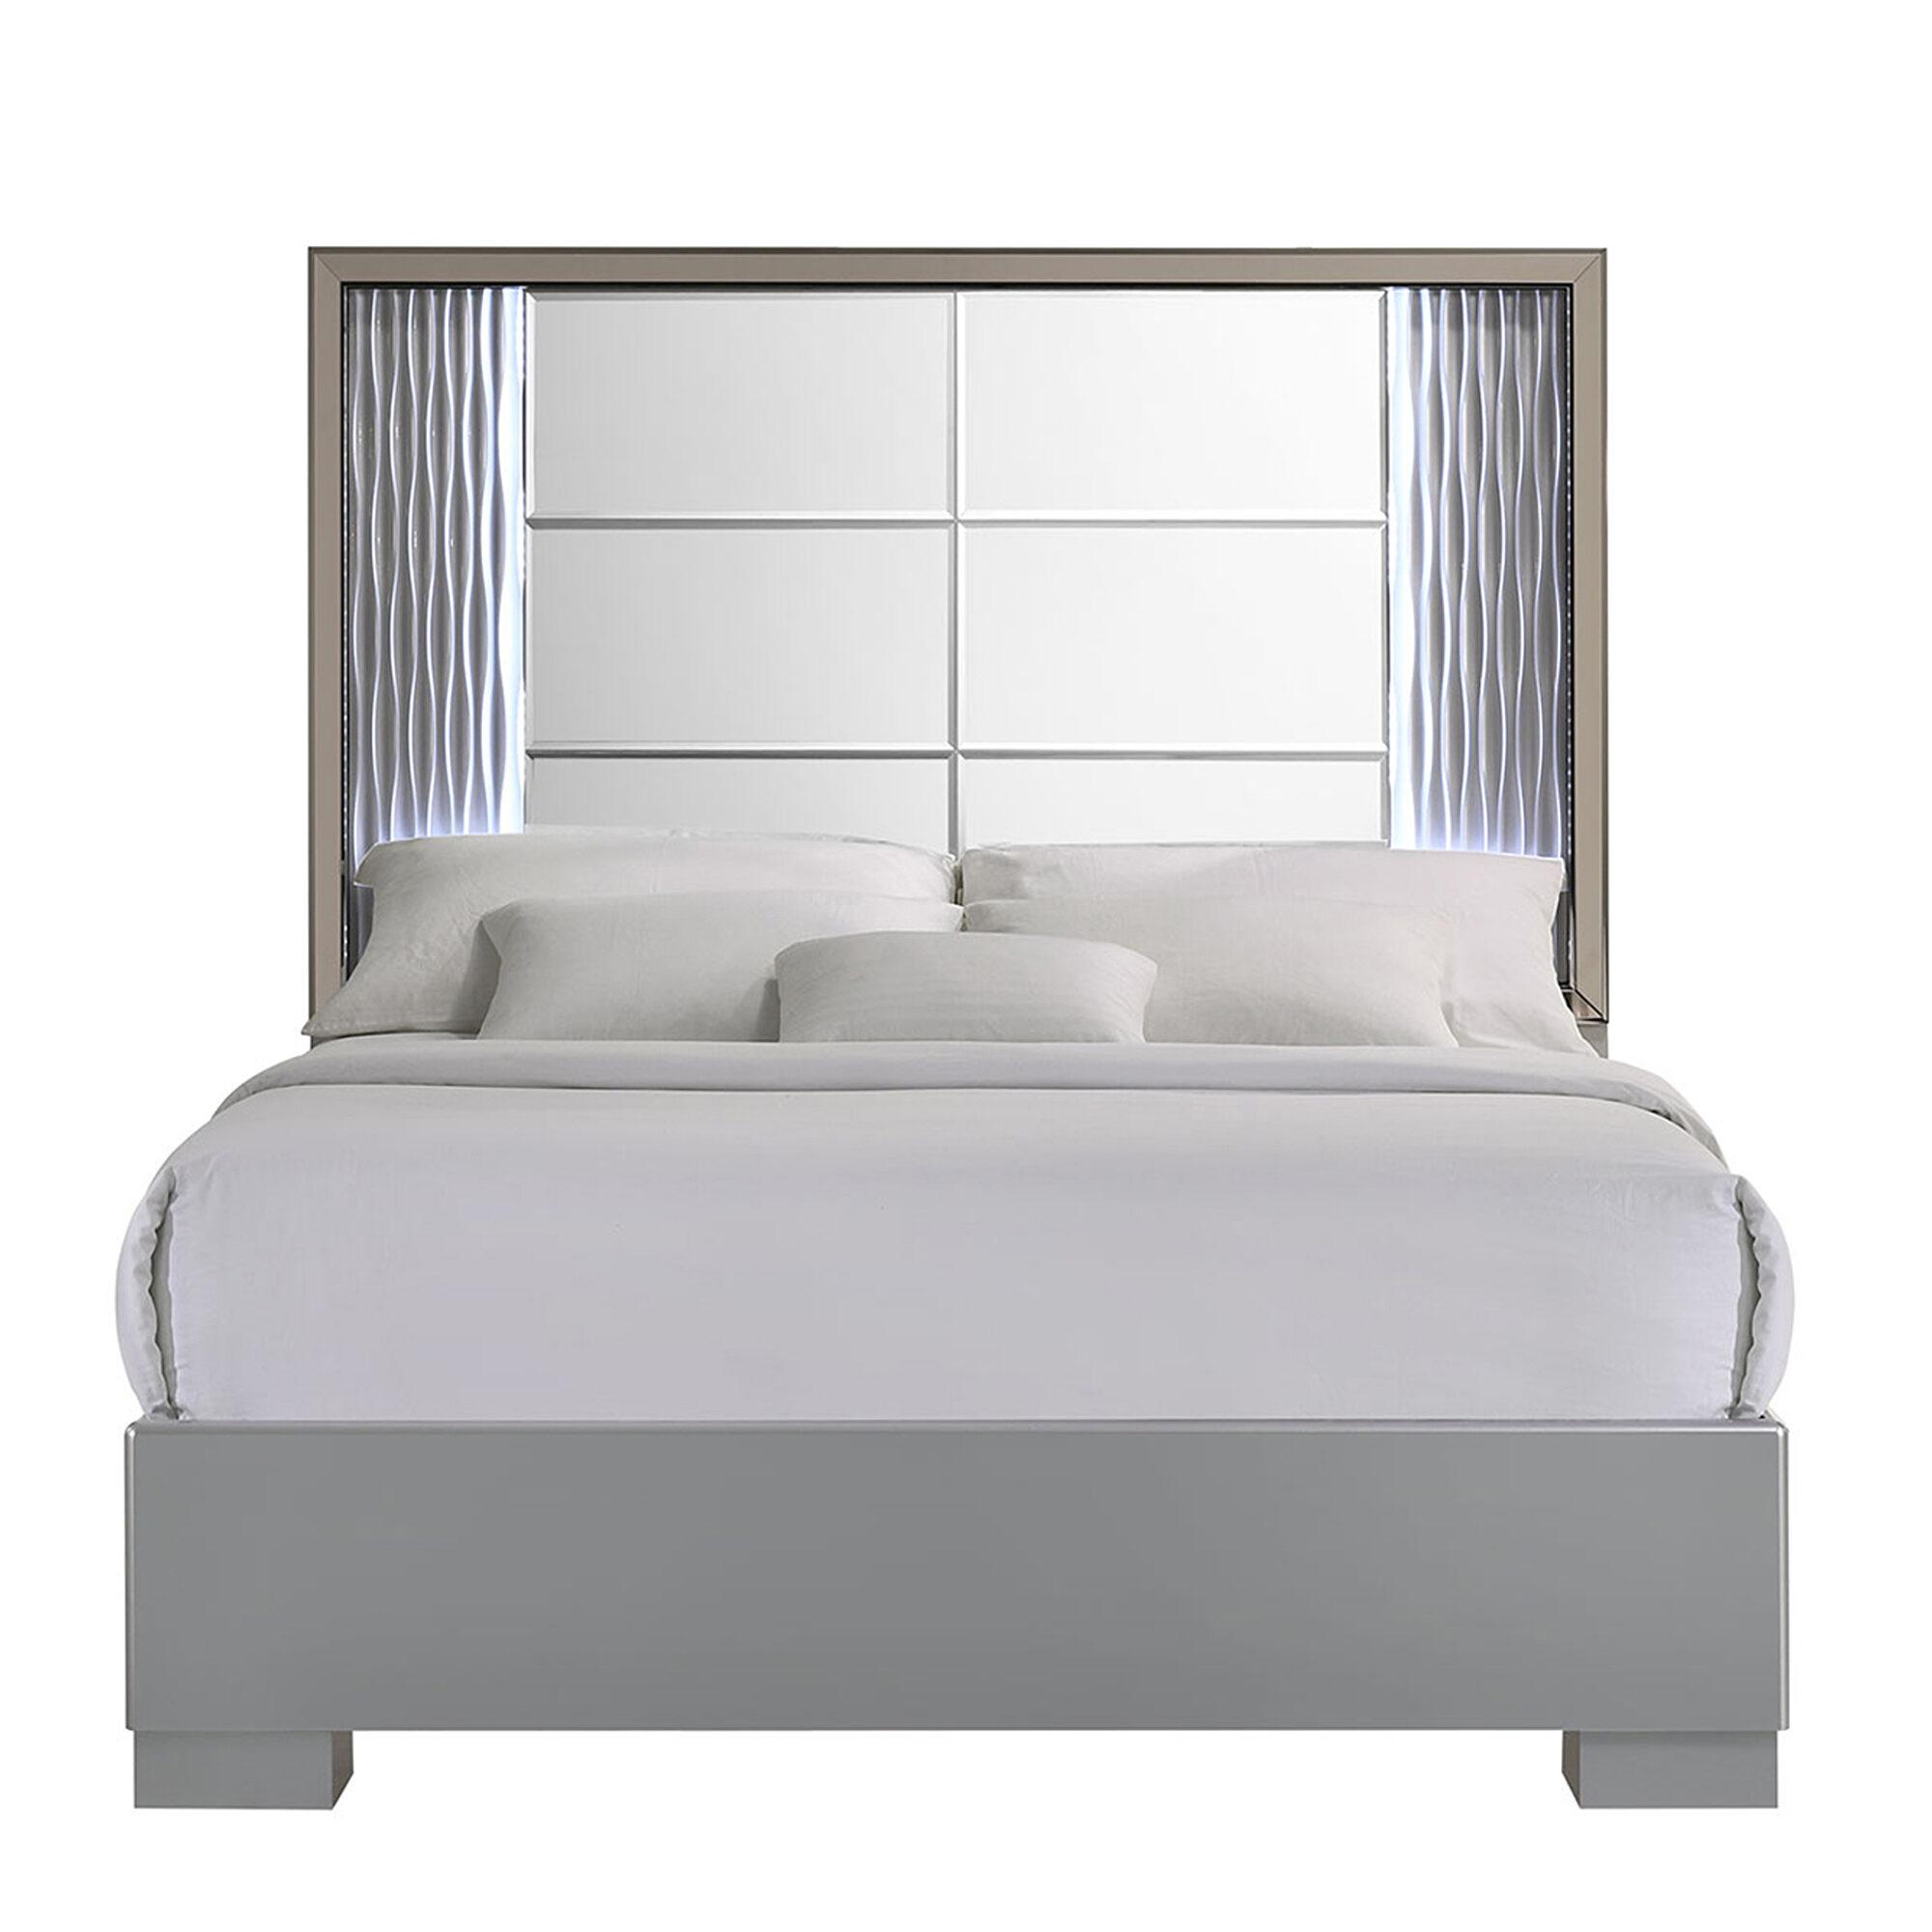 Contemporary Platform Bed SKYLINE SKYLINE-SILVER-KB in Mirrored, Silver 